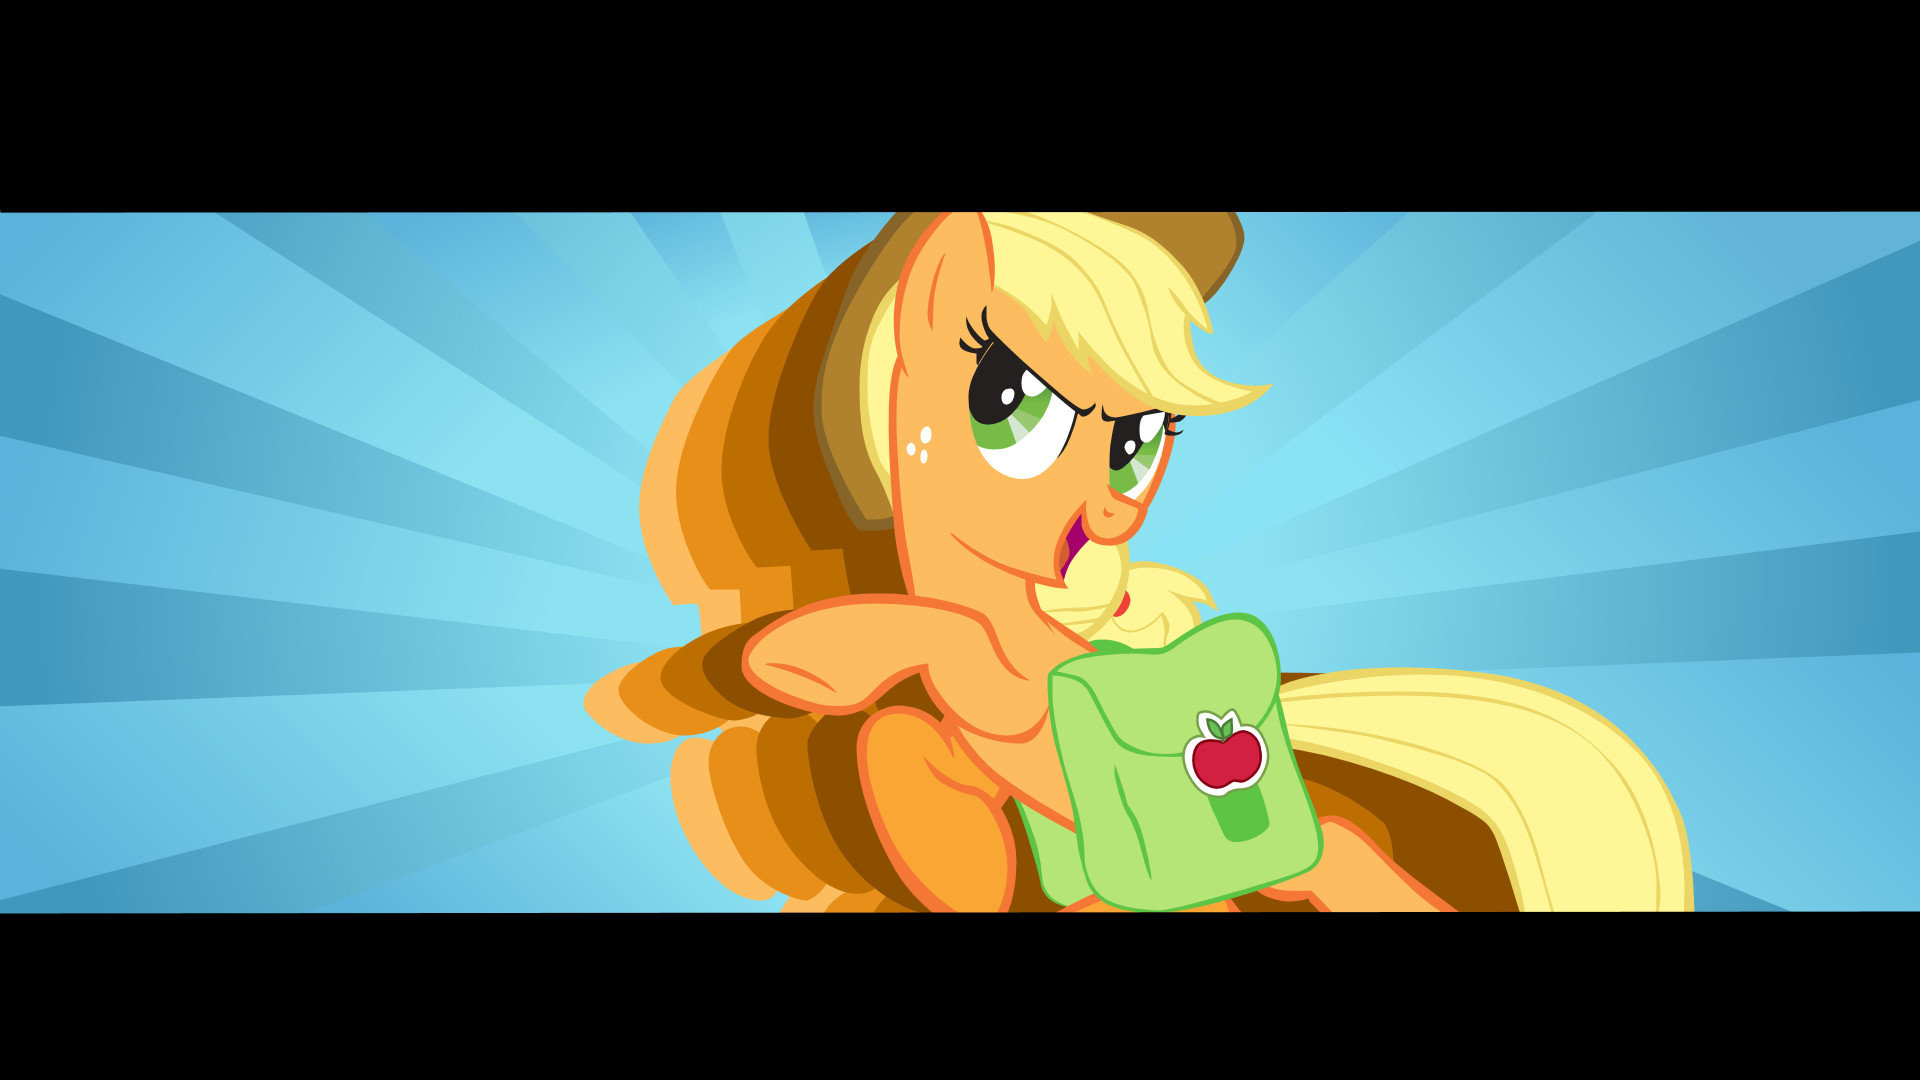 Best Applejack (My Little Pony) wallpaper ID:154442 for High Resolution full hd desktop